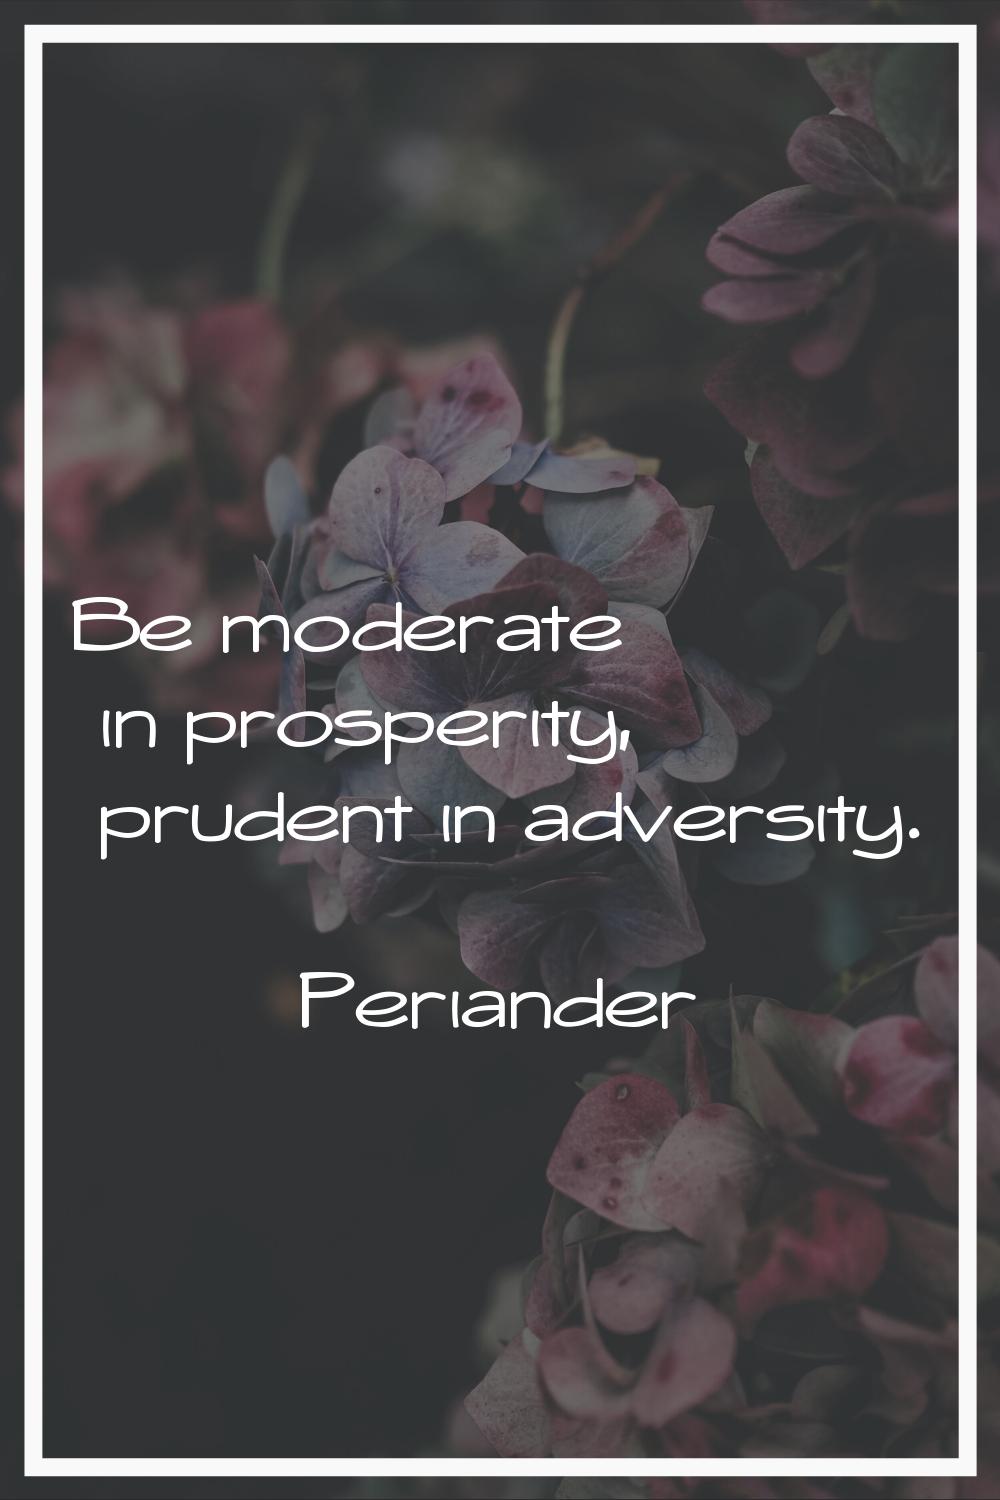 Be moderate in prosperity, prudent in adversity.